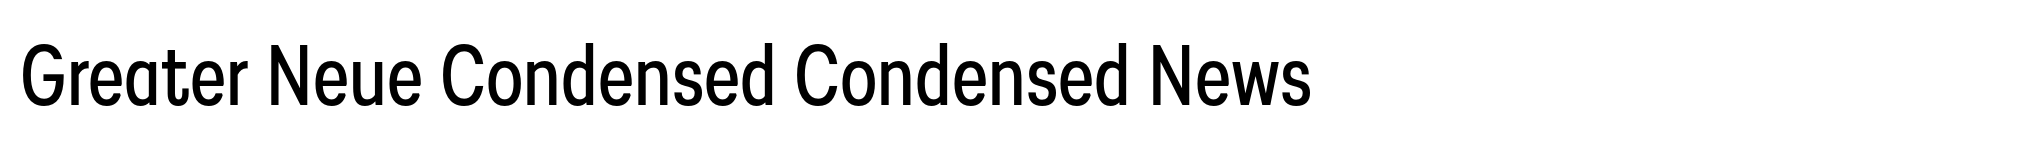 Greater Neue Condensed Condensed News image